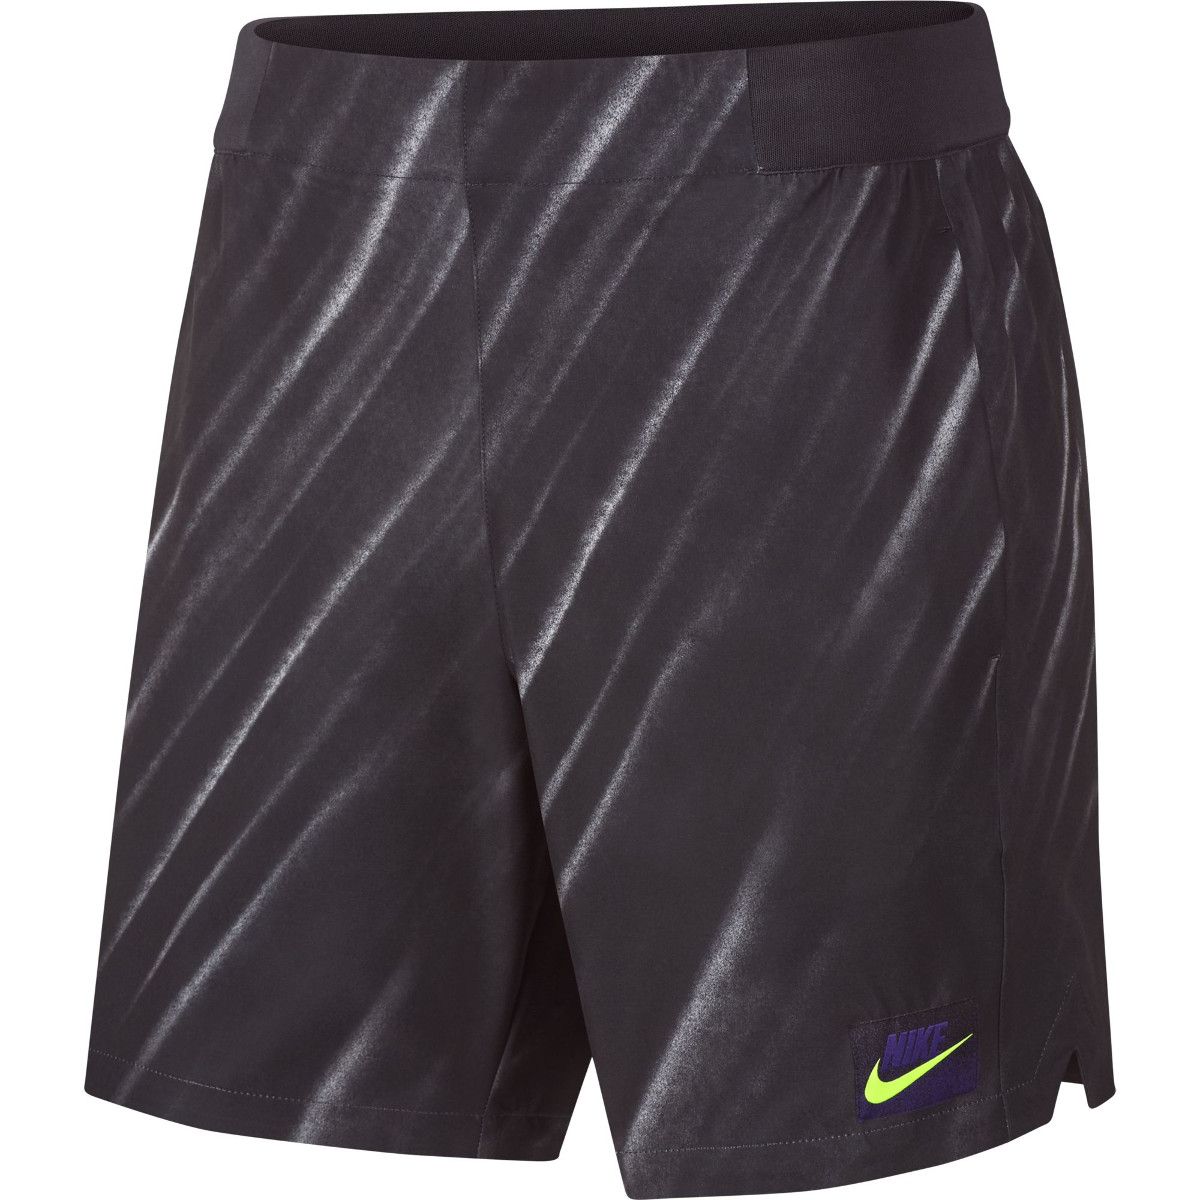 NikeCourt Flex Ace Printed Men's Tennis Shorts AT4319-045